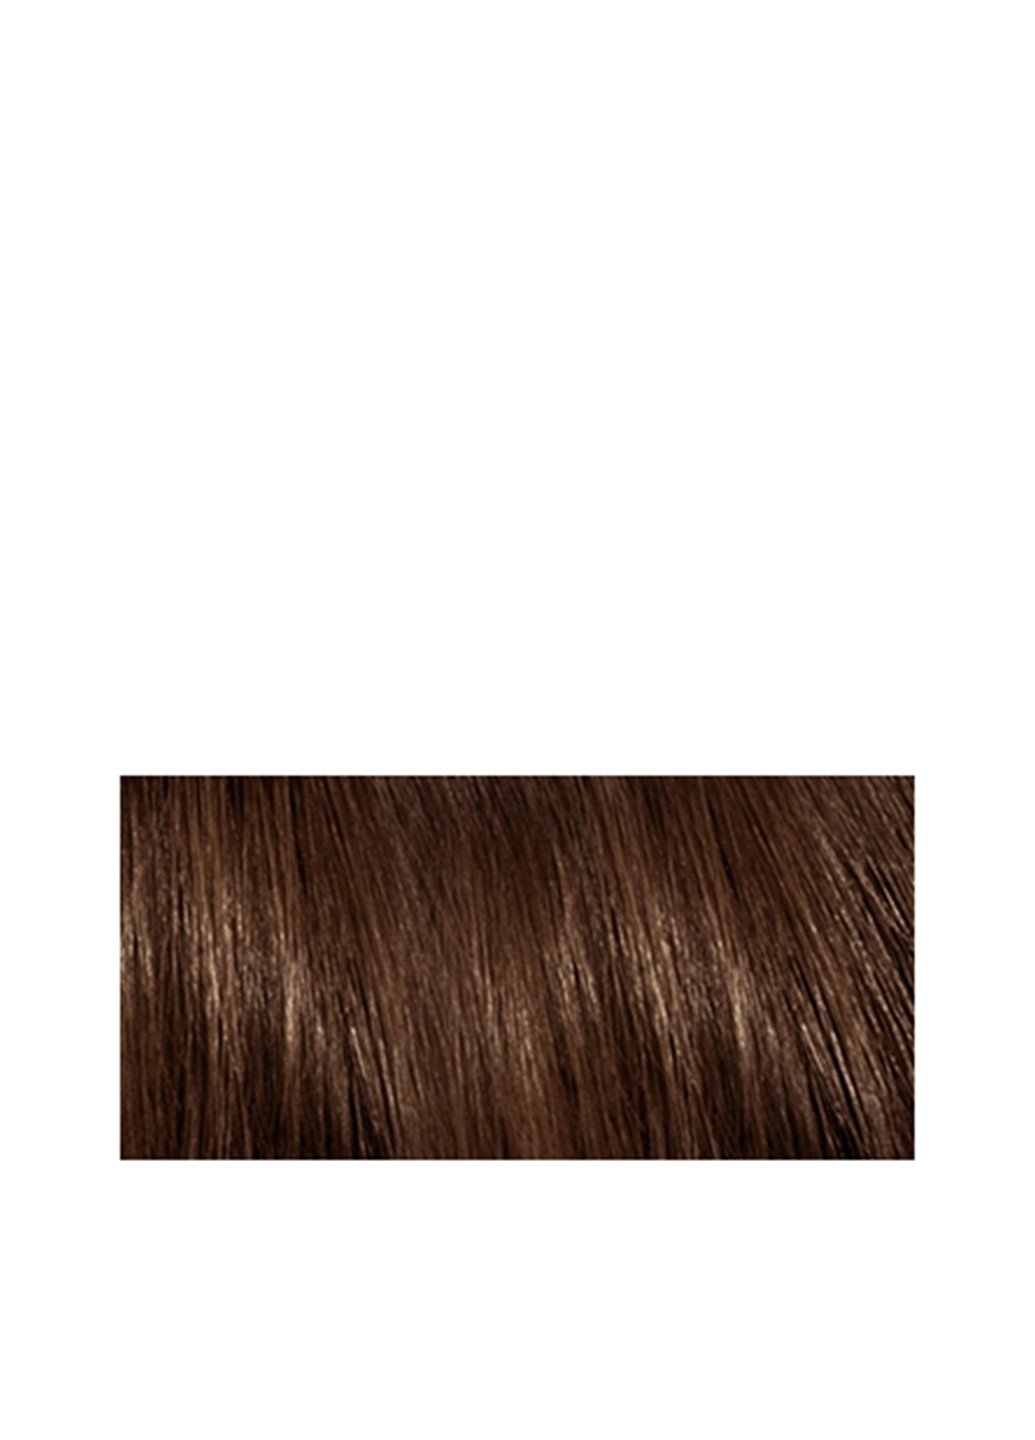 Краска для волос Casting Crème Gloss №400 (каштан) L'Oreal Paris (96655453)